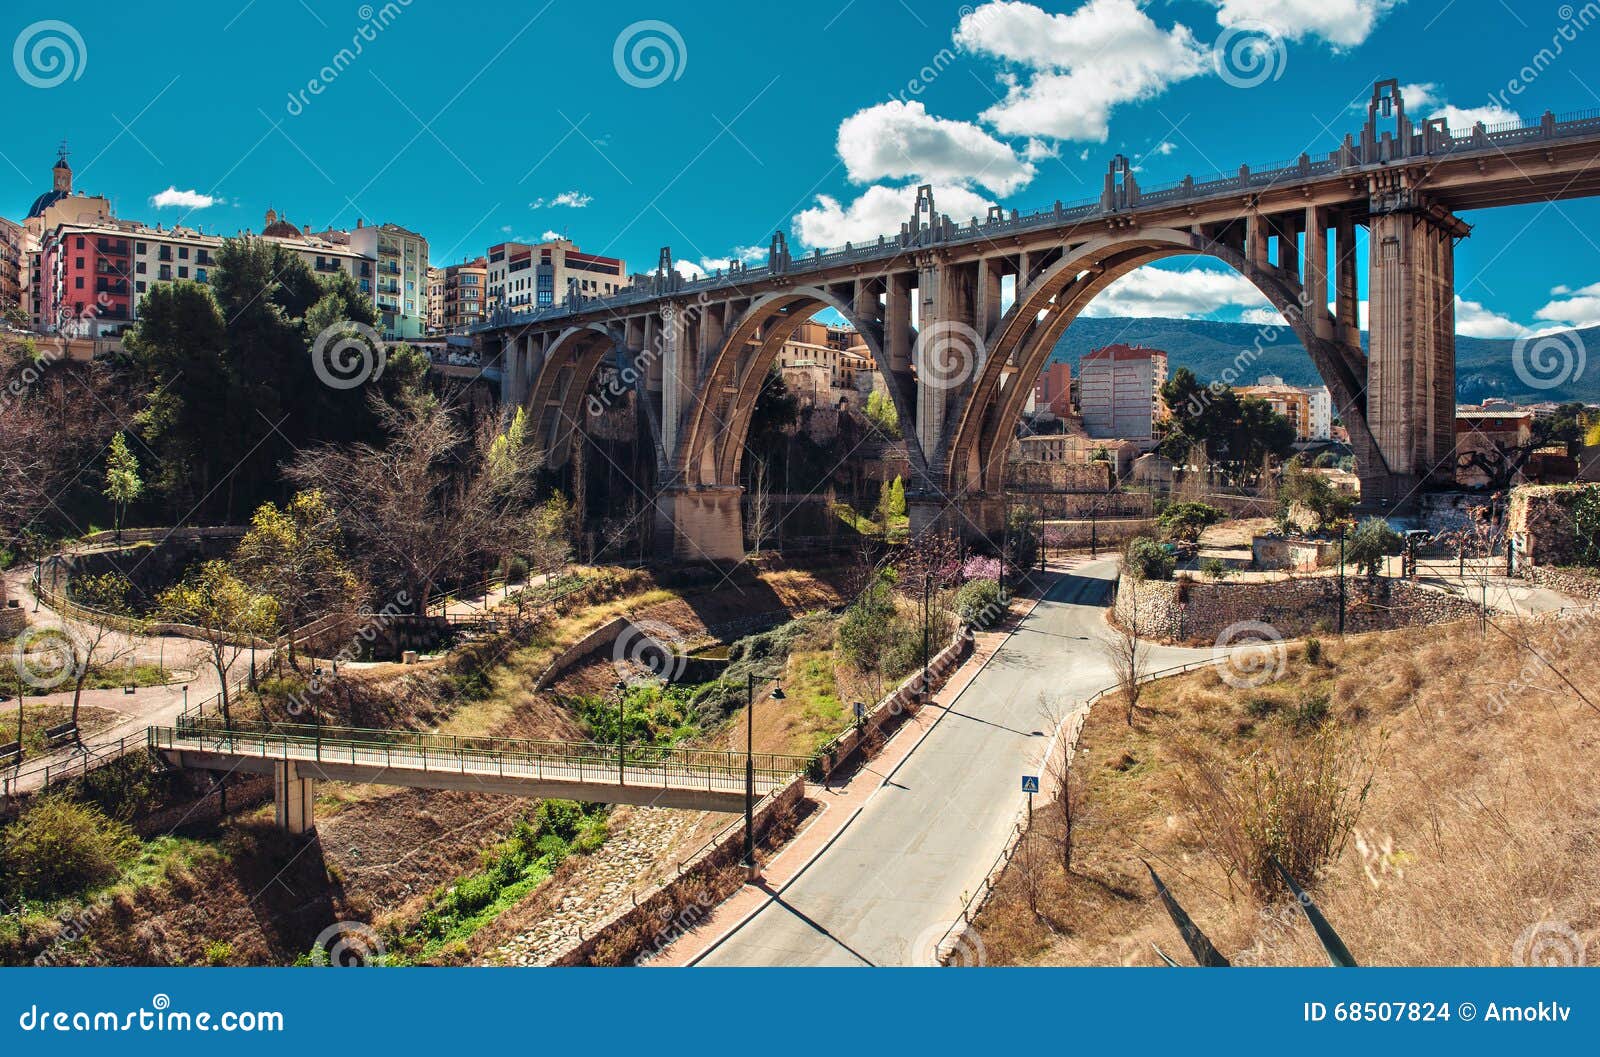 san jordi bridge in alcoy city. spain